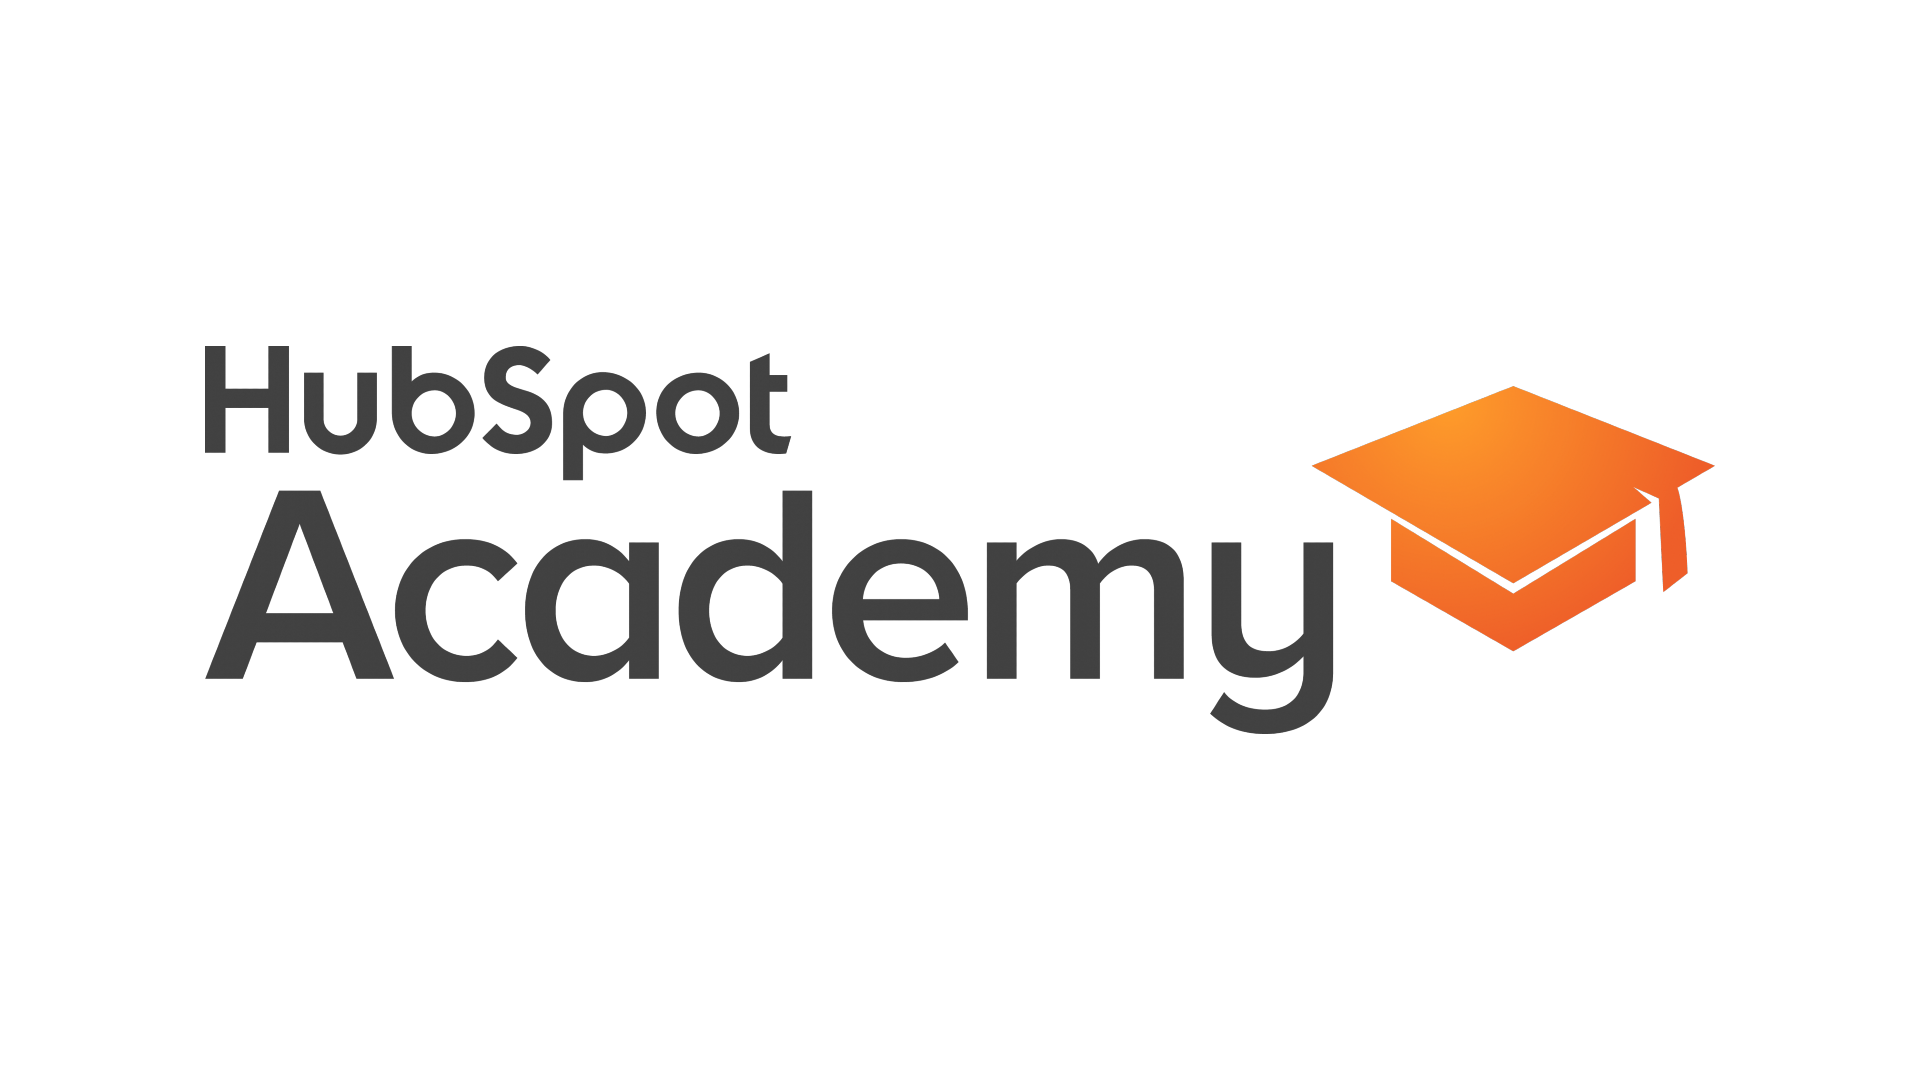 HubSpot pledges a $5 donation for each certification in HubSpot Academy